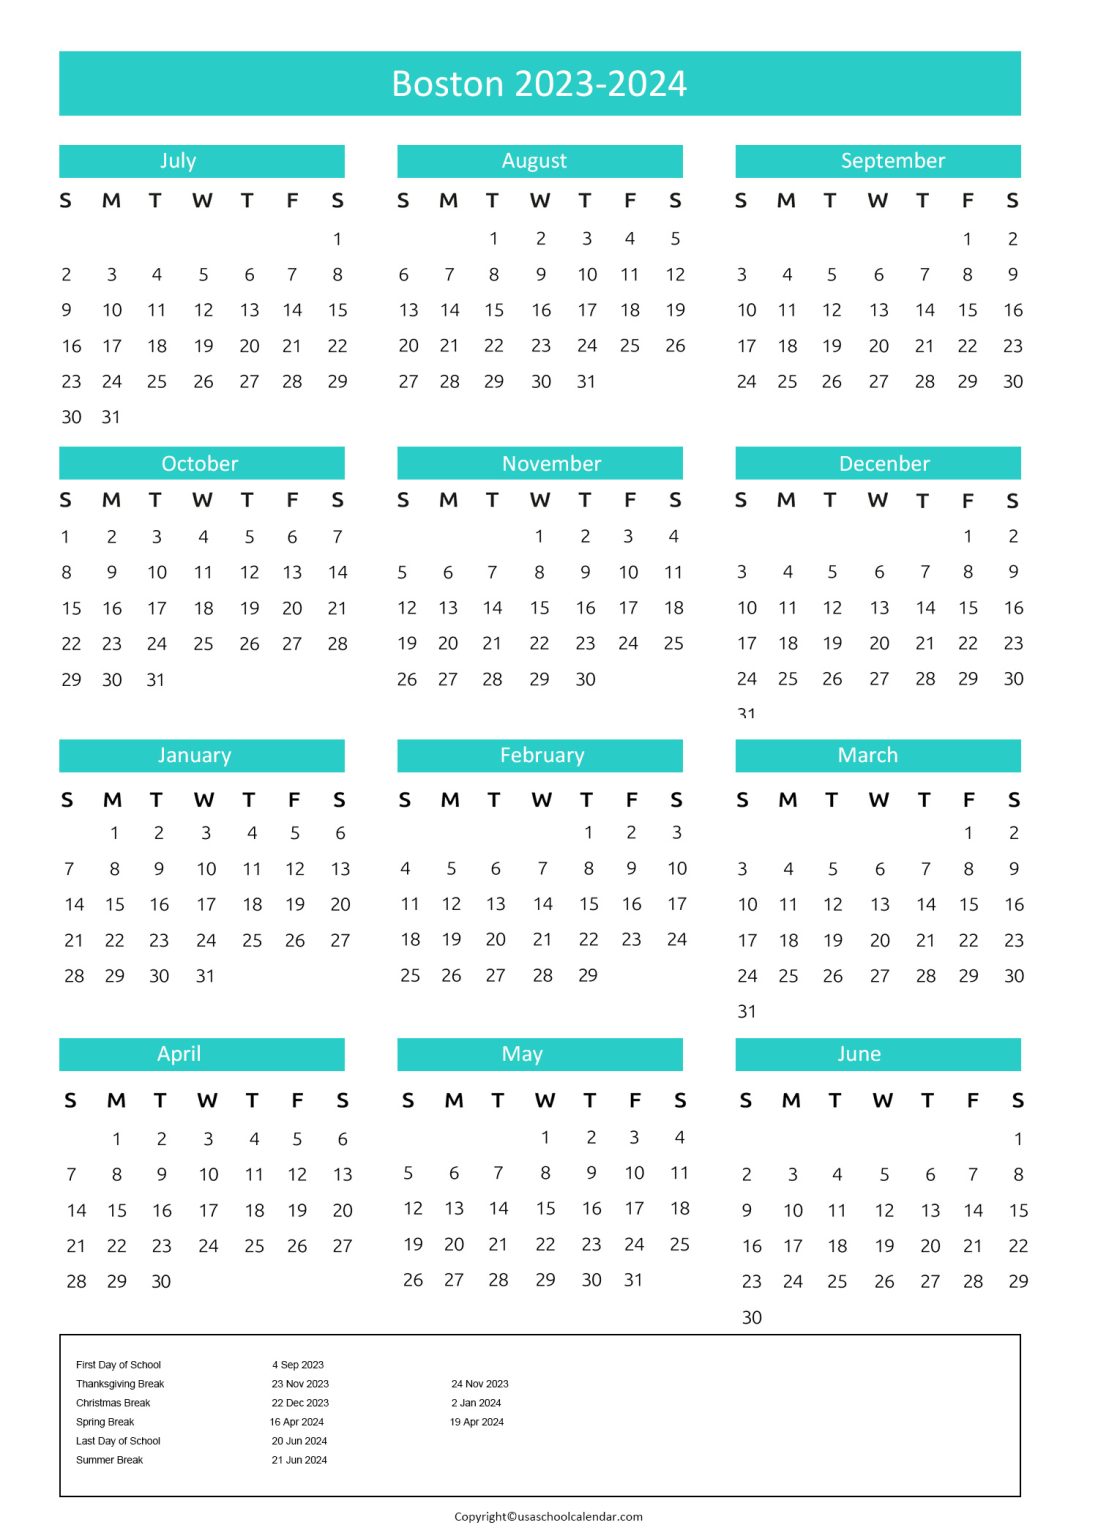 Boston Public Schools Calendar Holidays 2023 2024